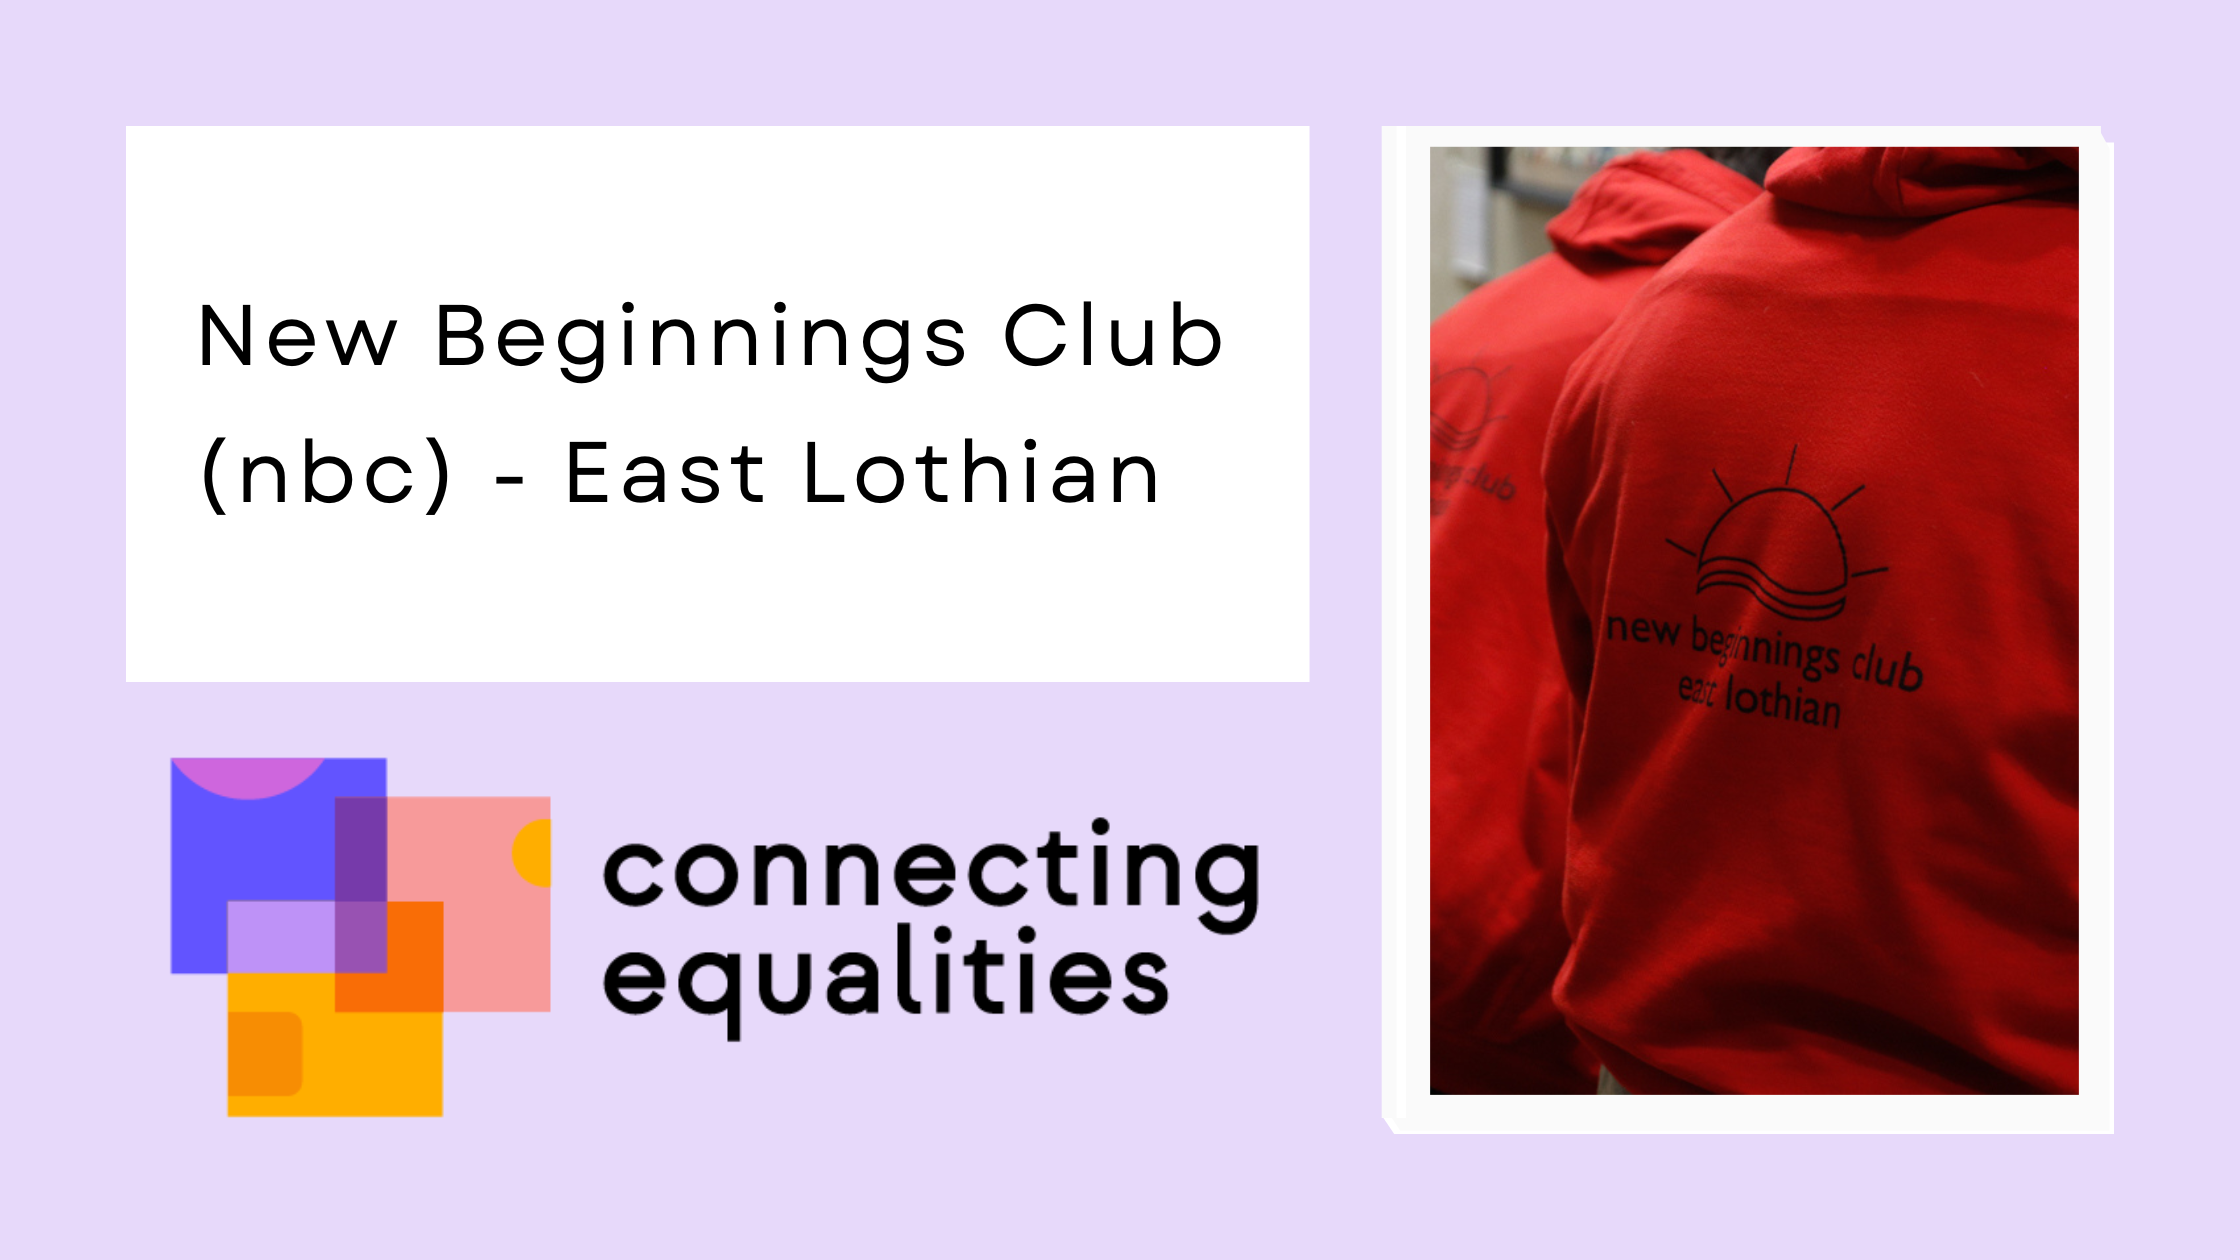 New Beginnings Club (nbc) - East Lothian